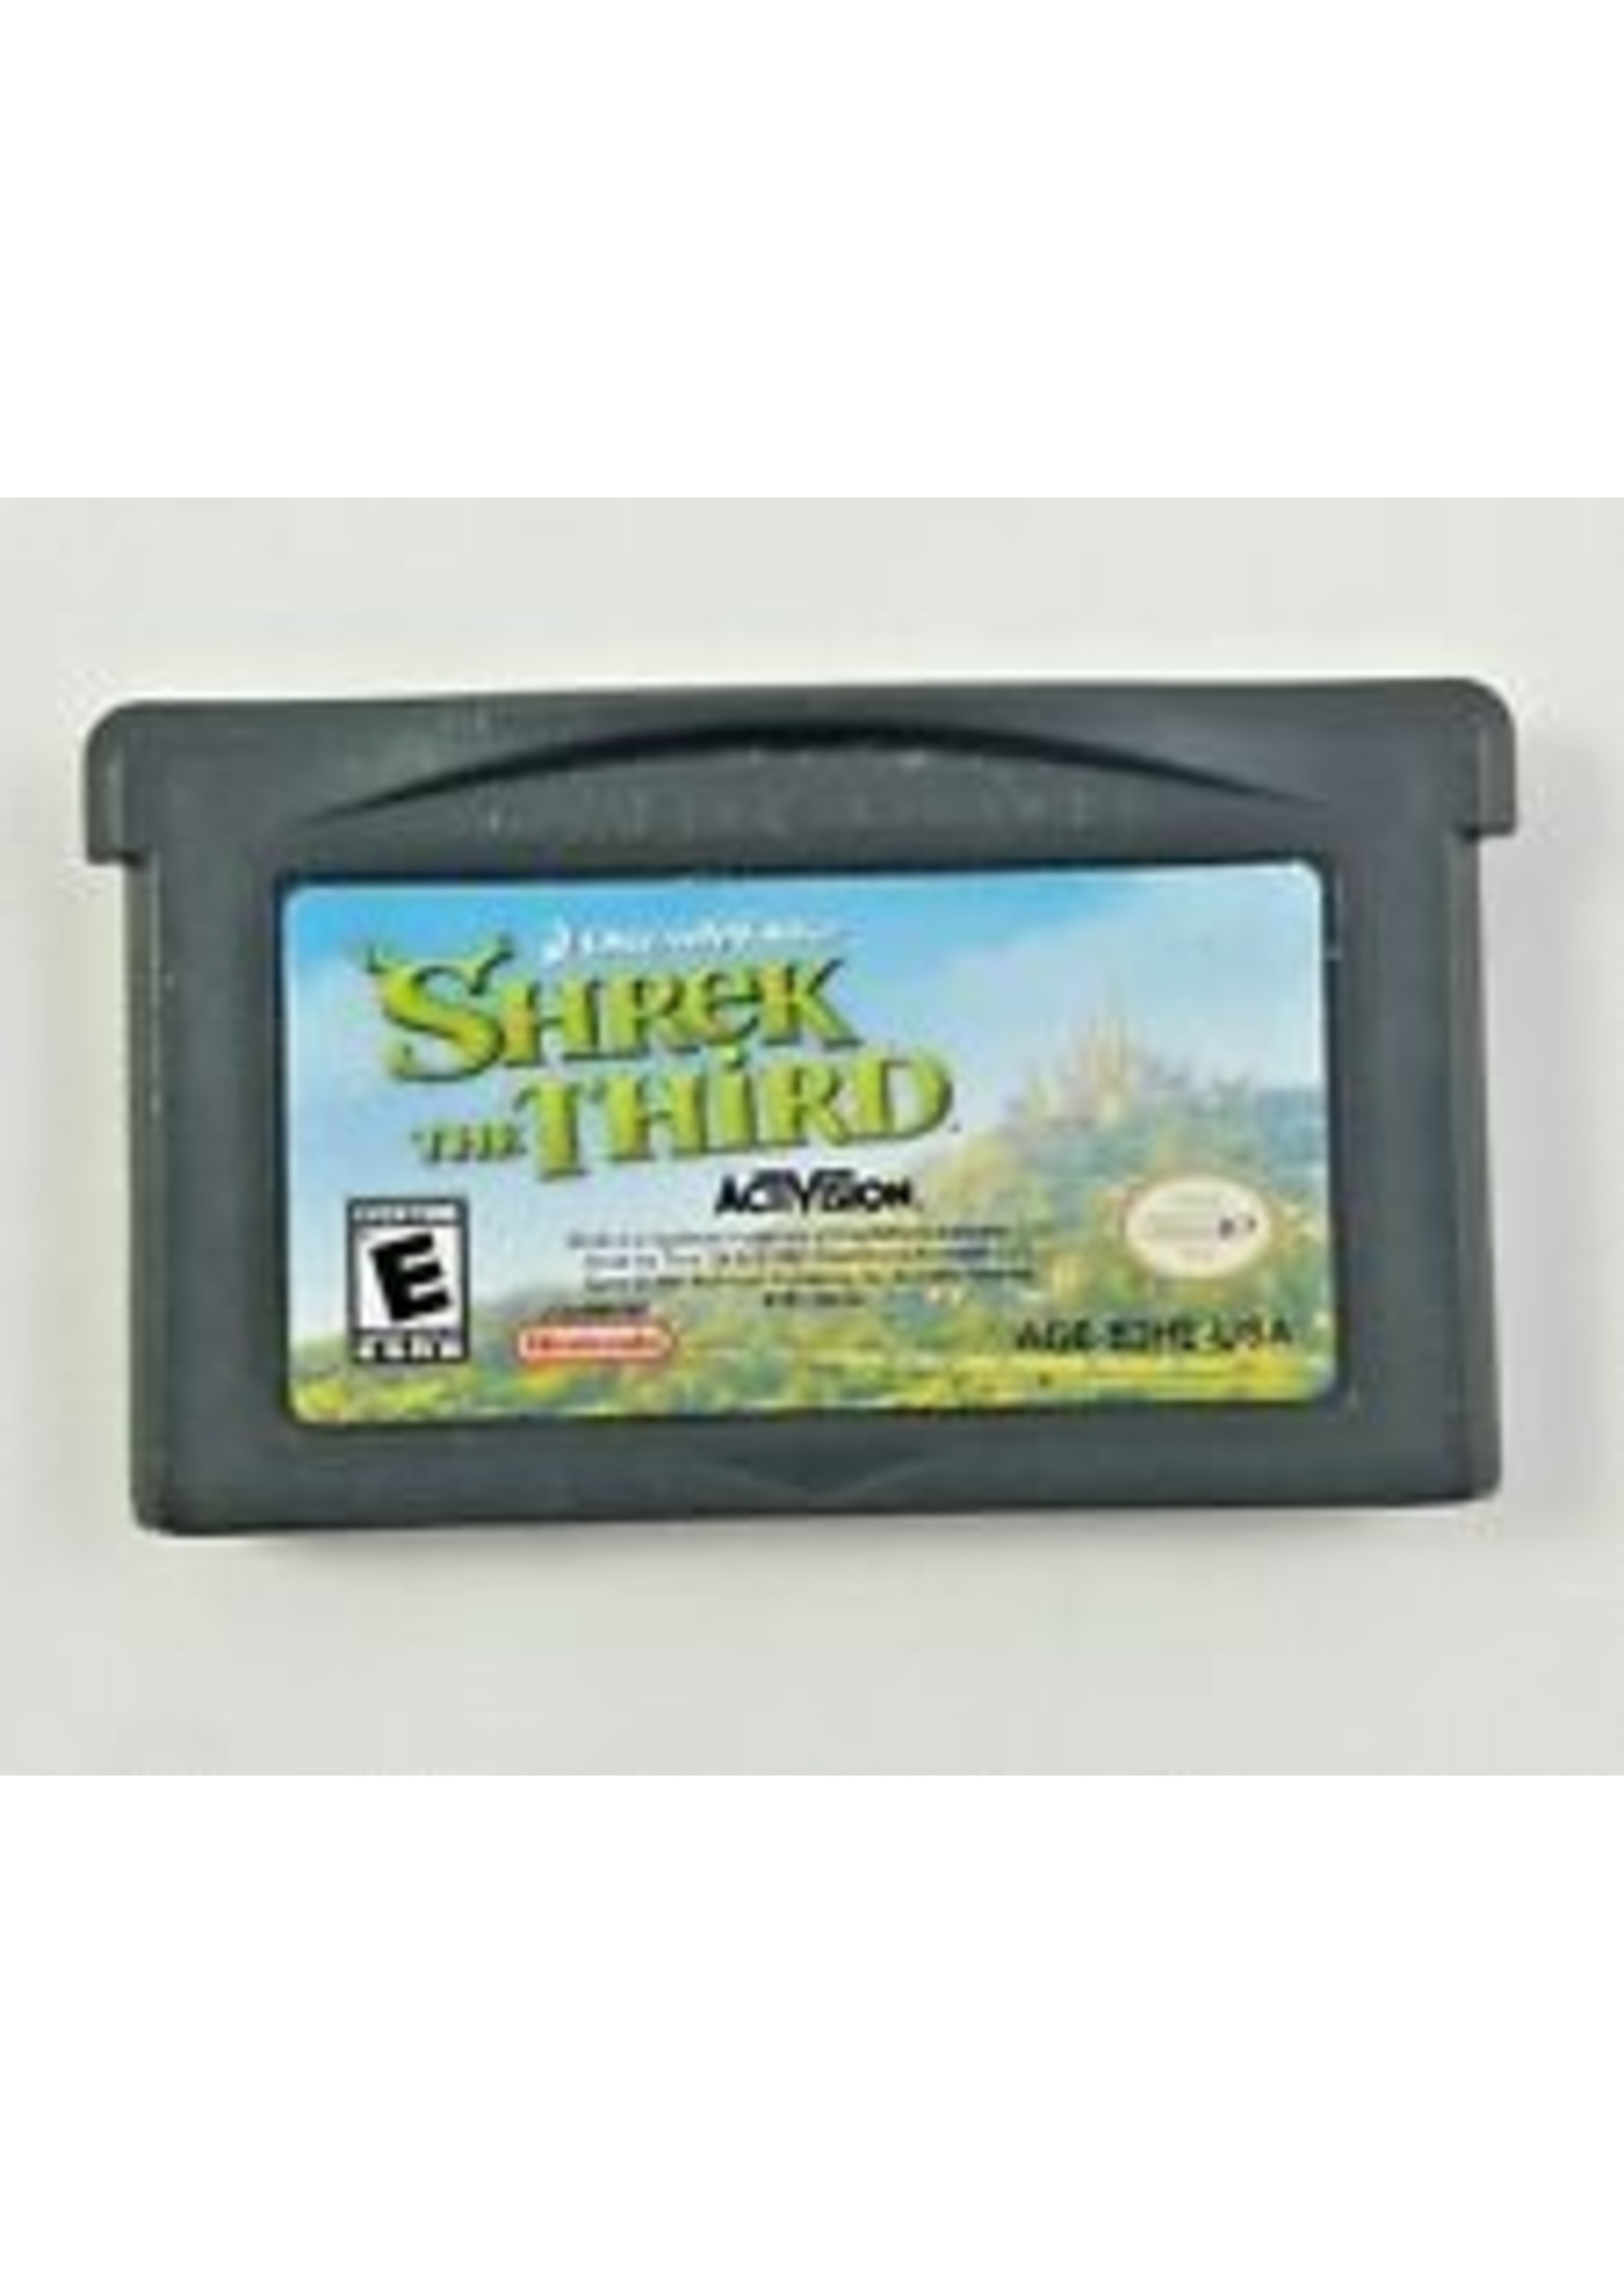 Nintendo Gameboy Advance Shrek the Third